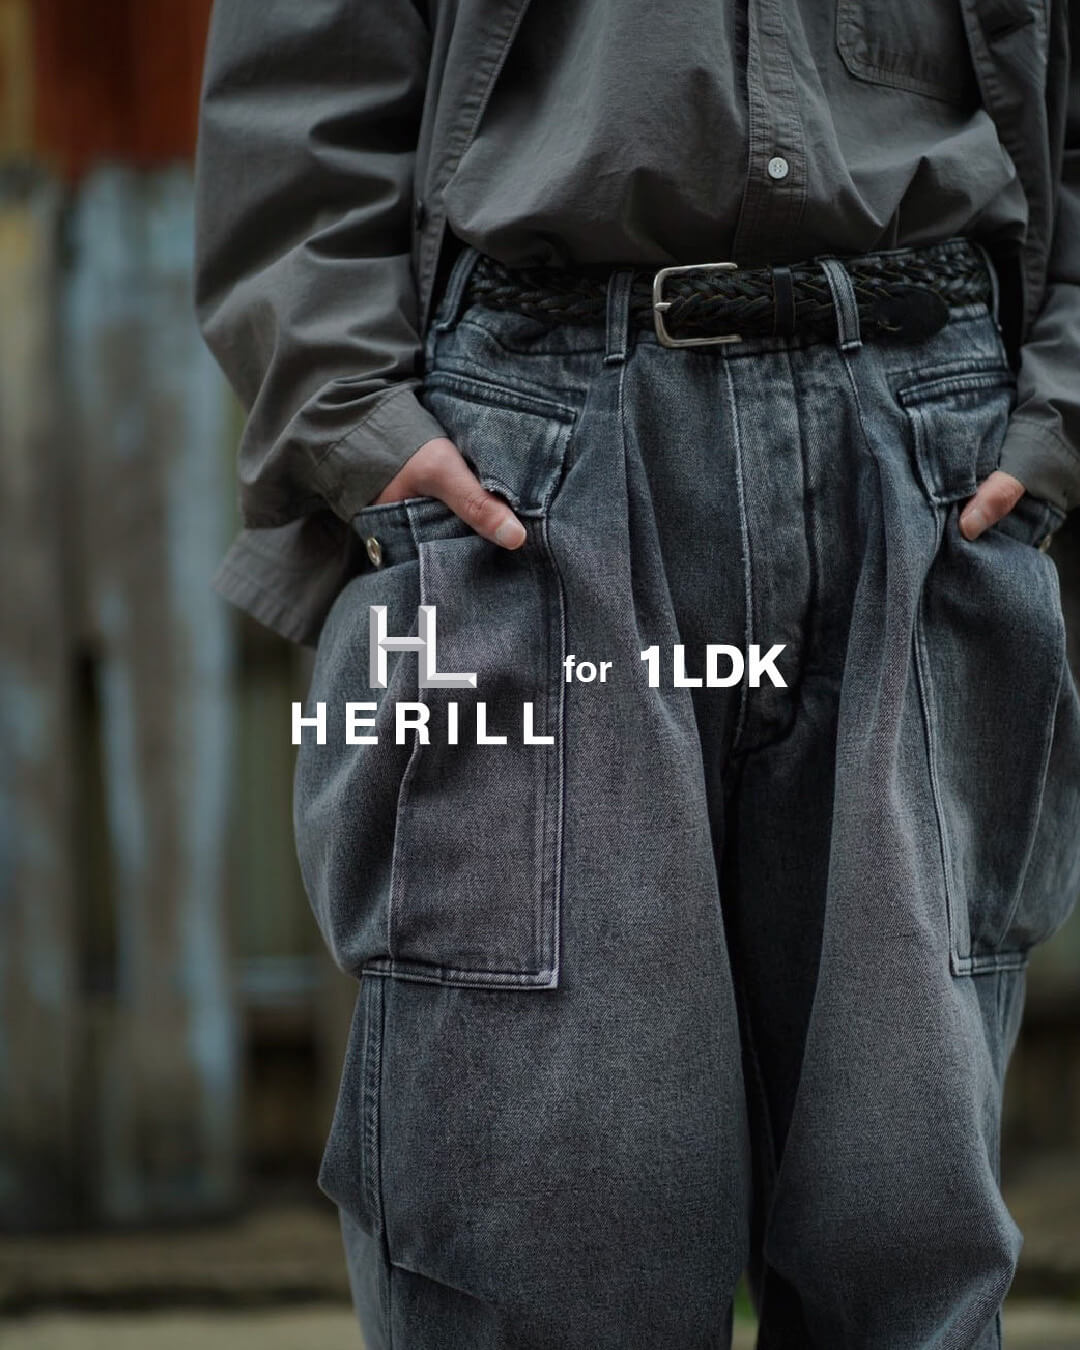 Herill 1LDK EX Denim Cargopants black